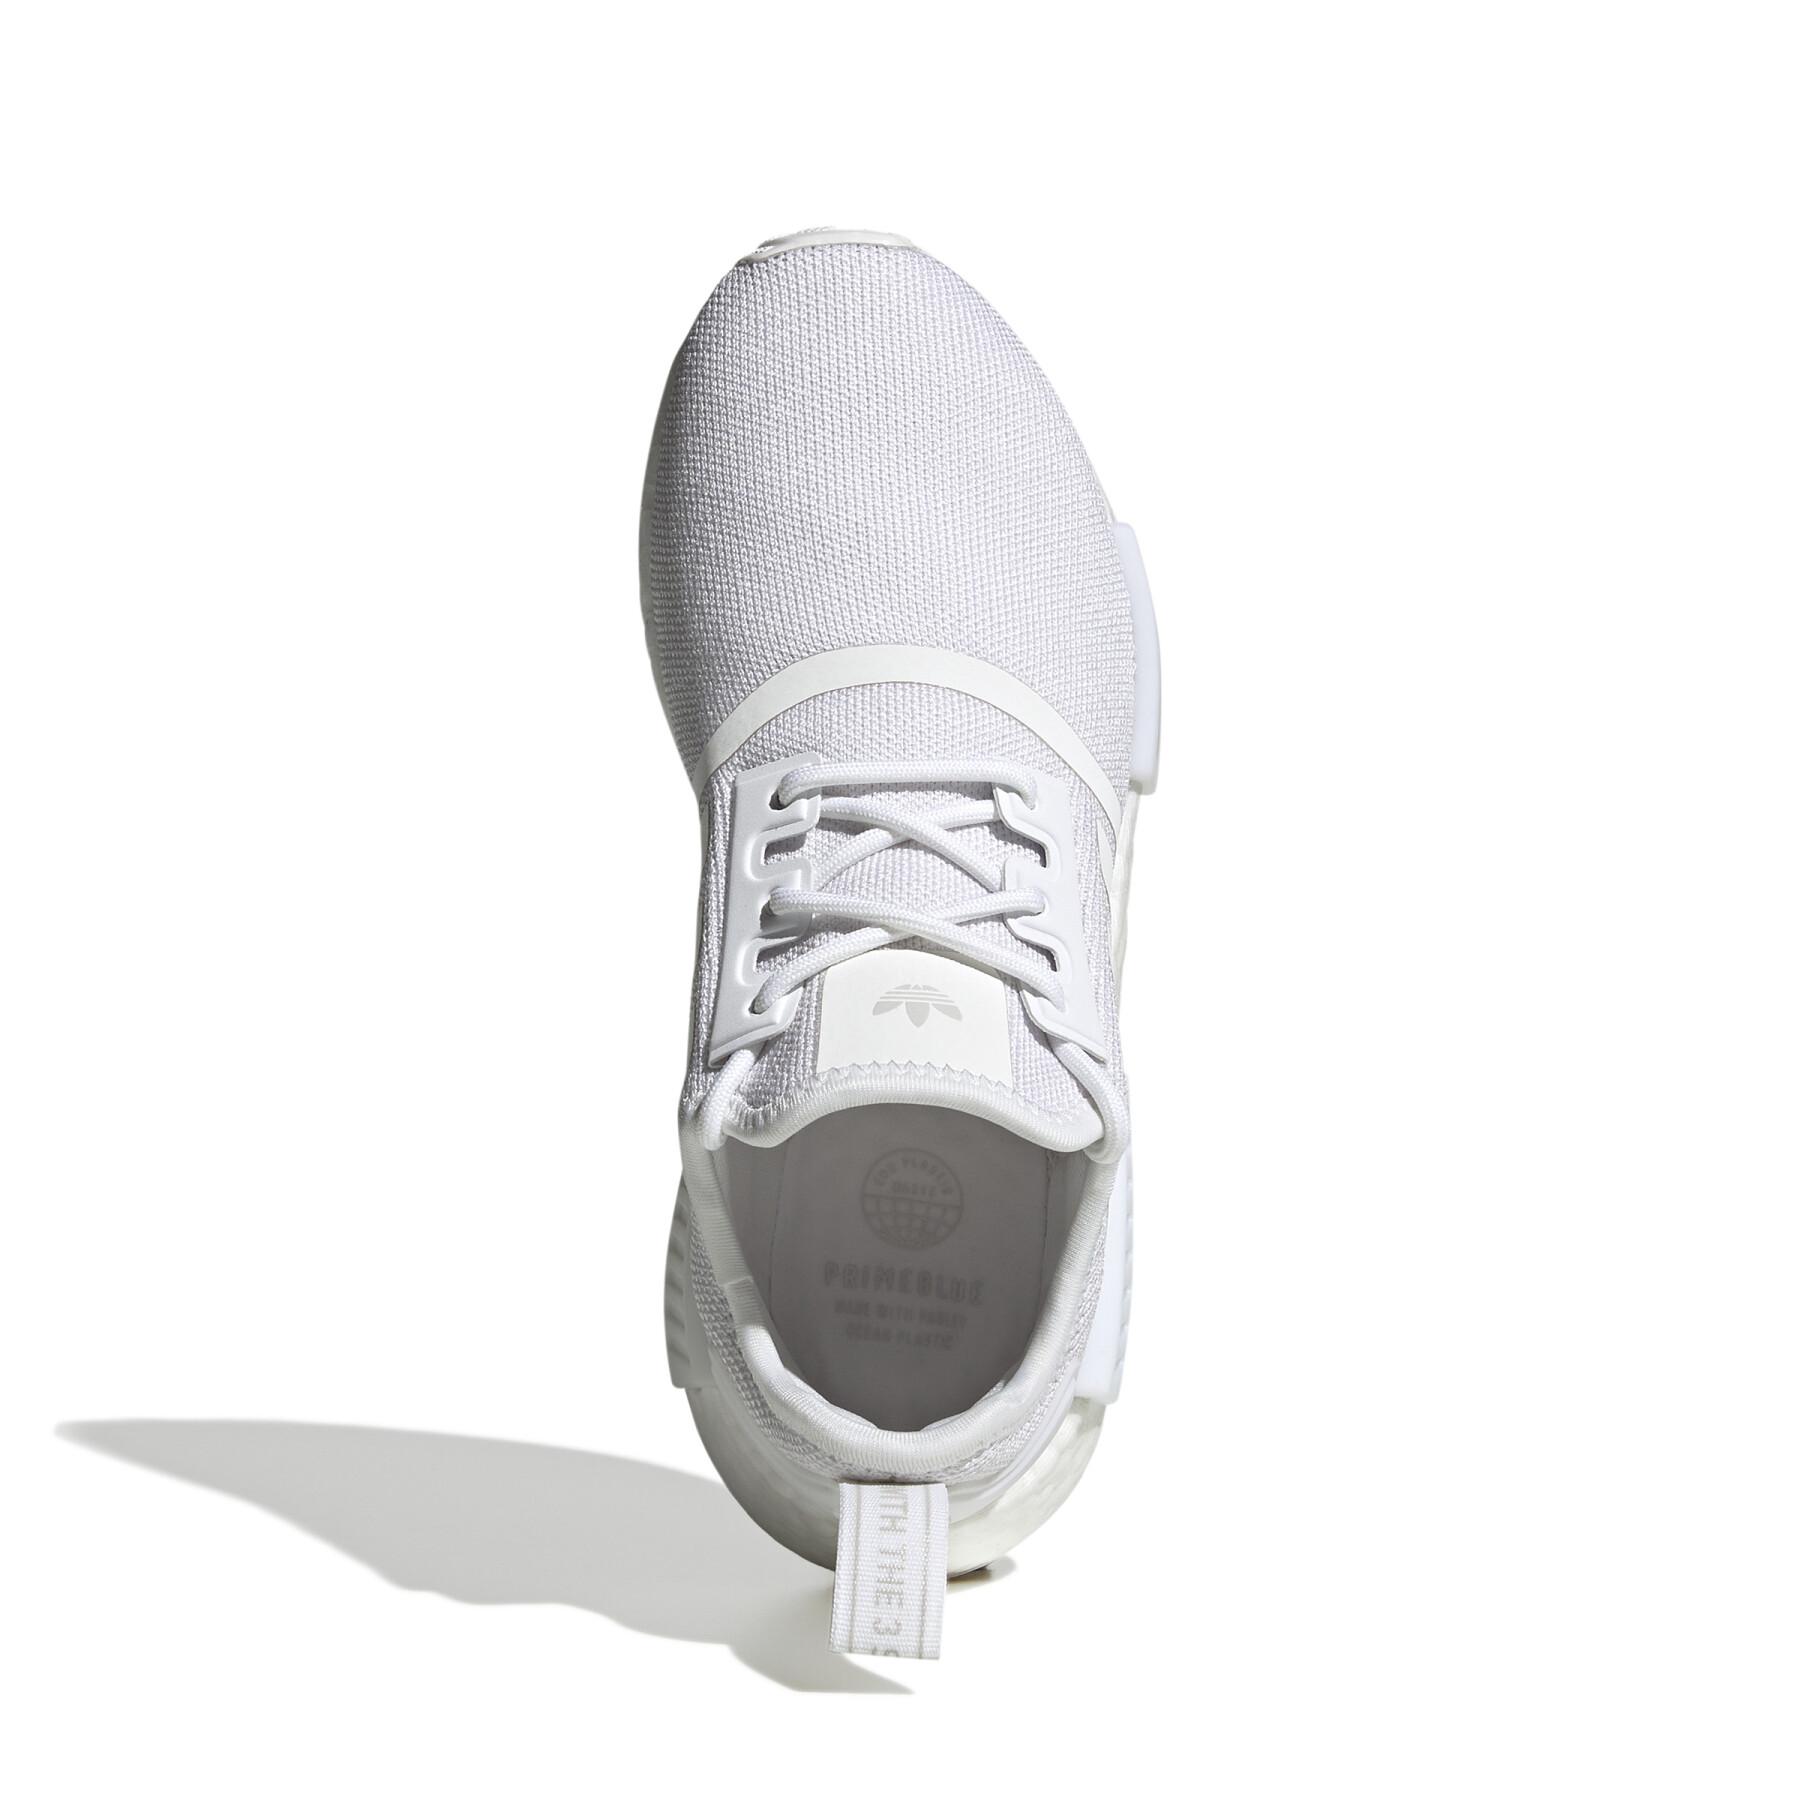 Children's sneakers adidas Originals NMD_R1 Refined